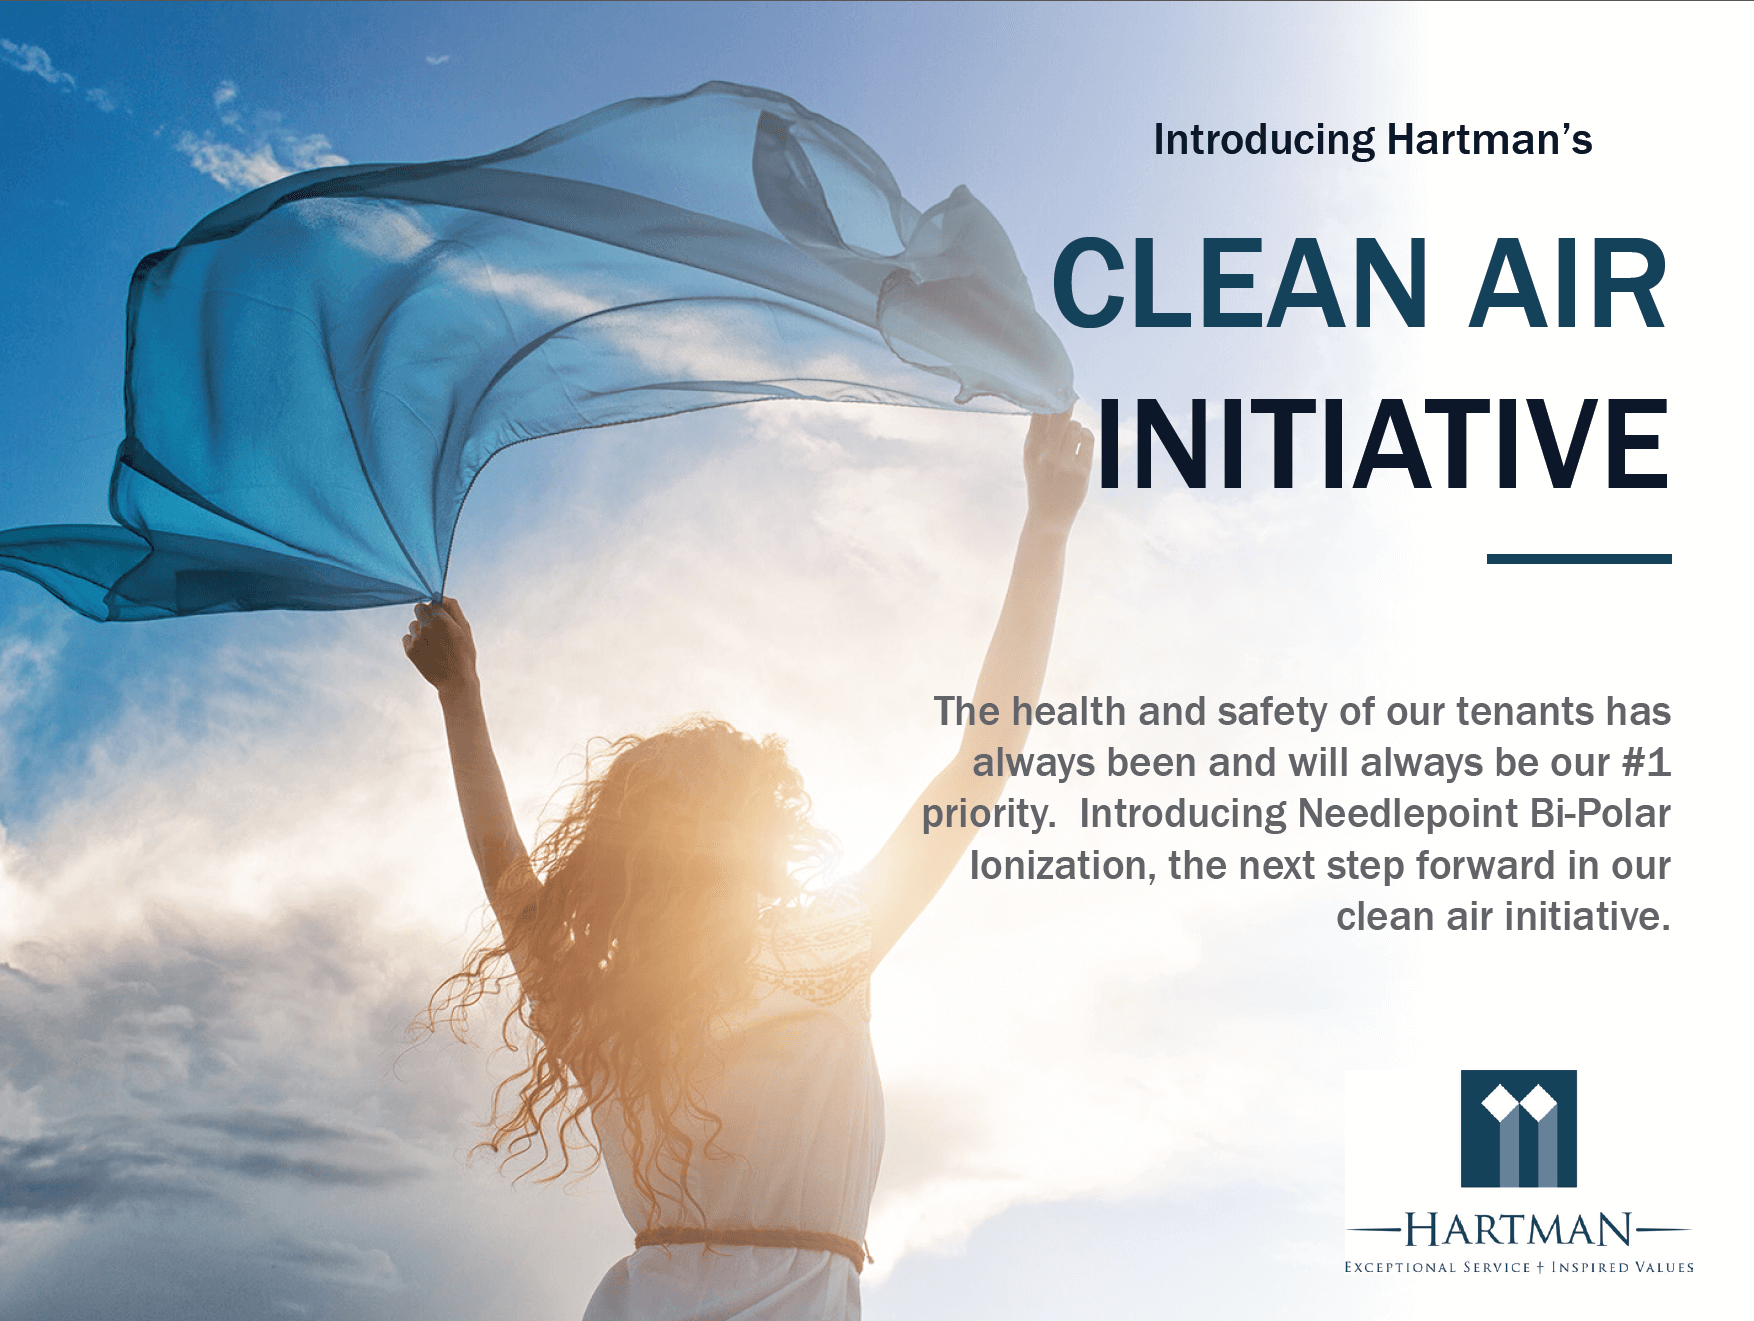 Hartman’s Clean Air Initiative